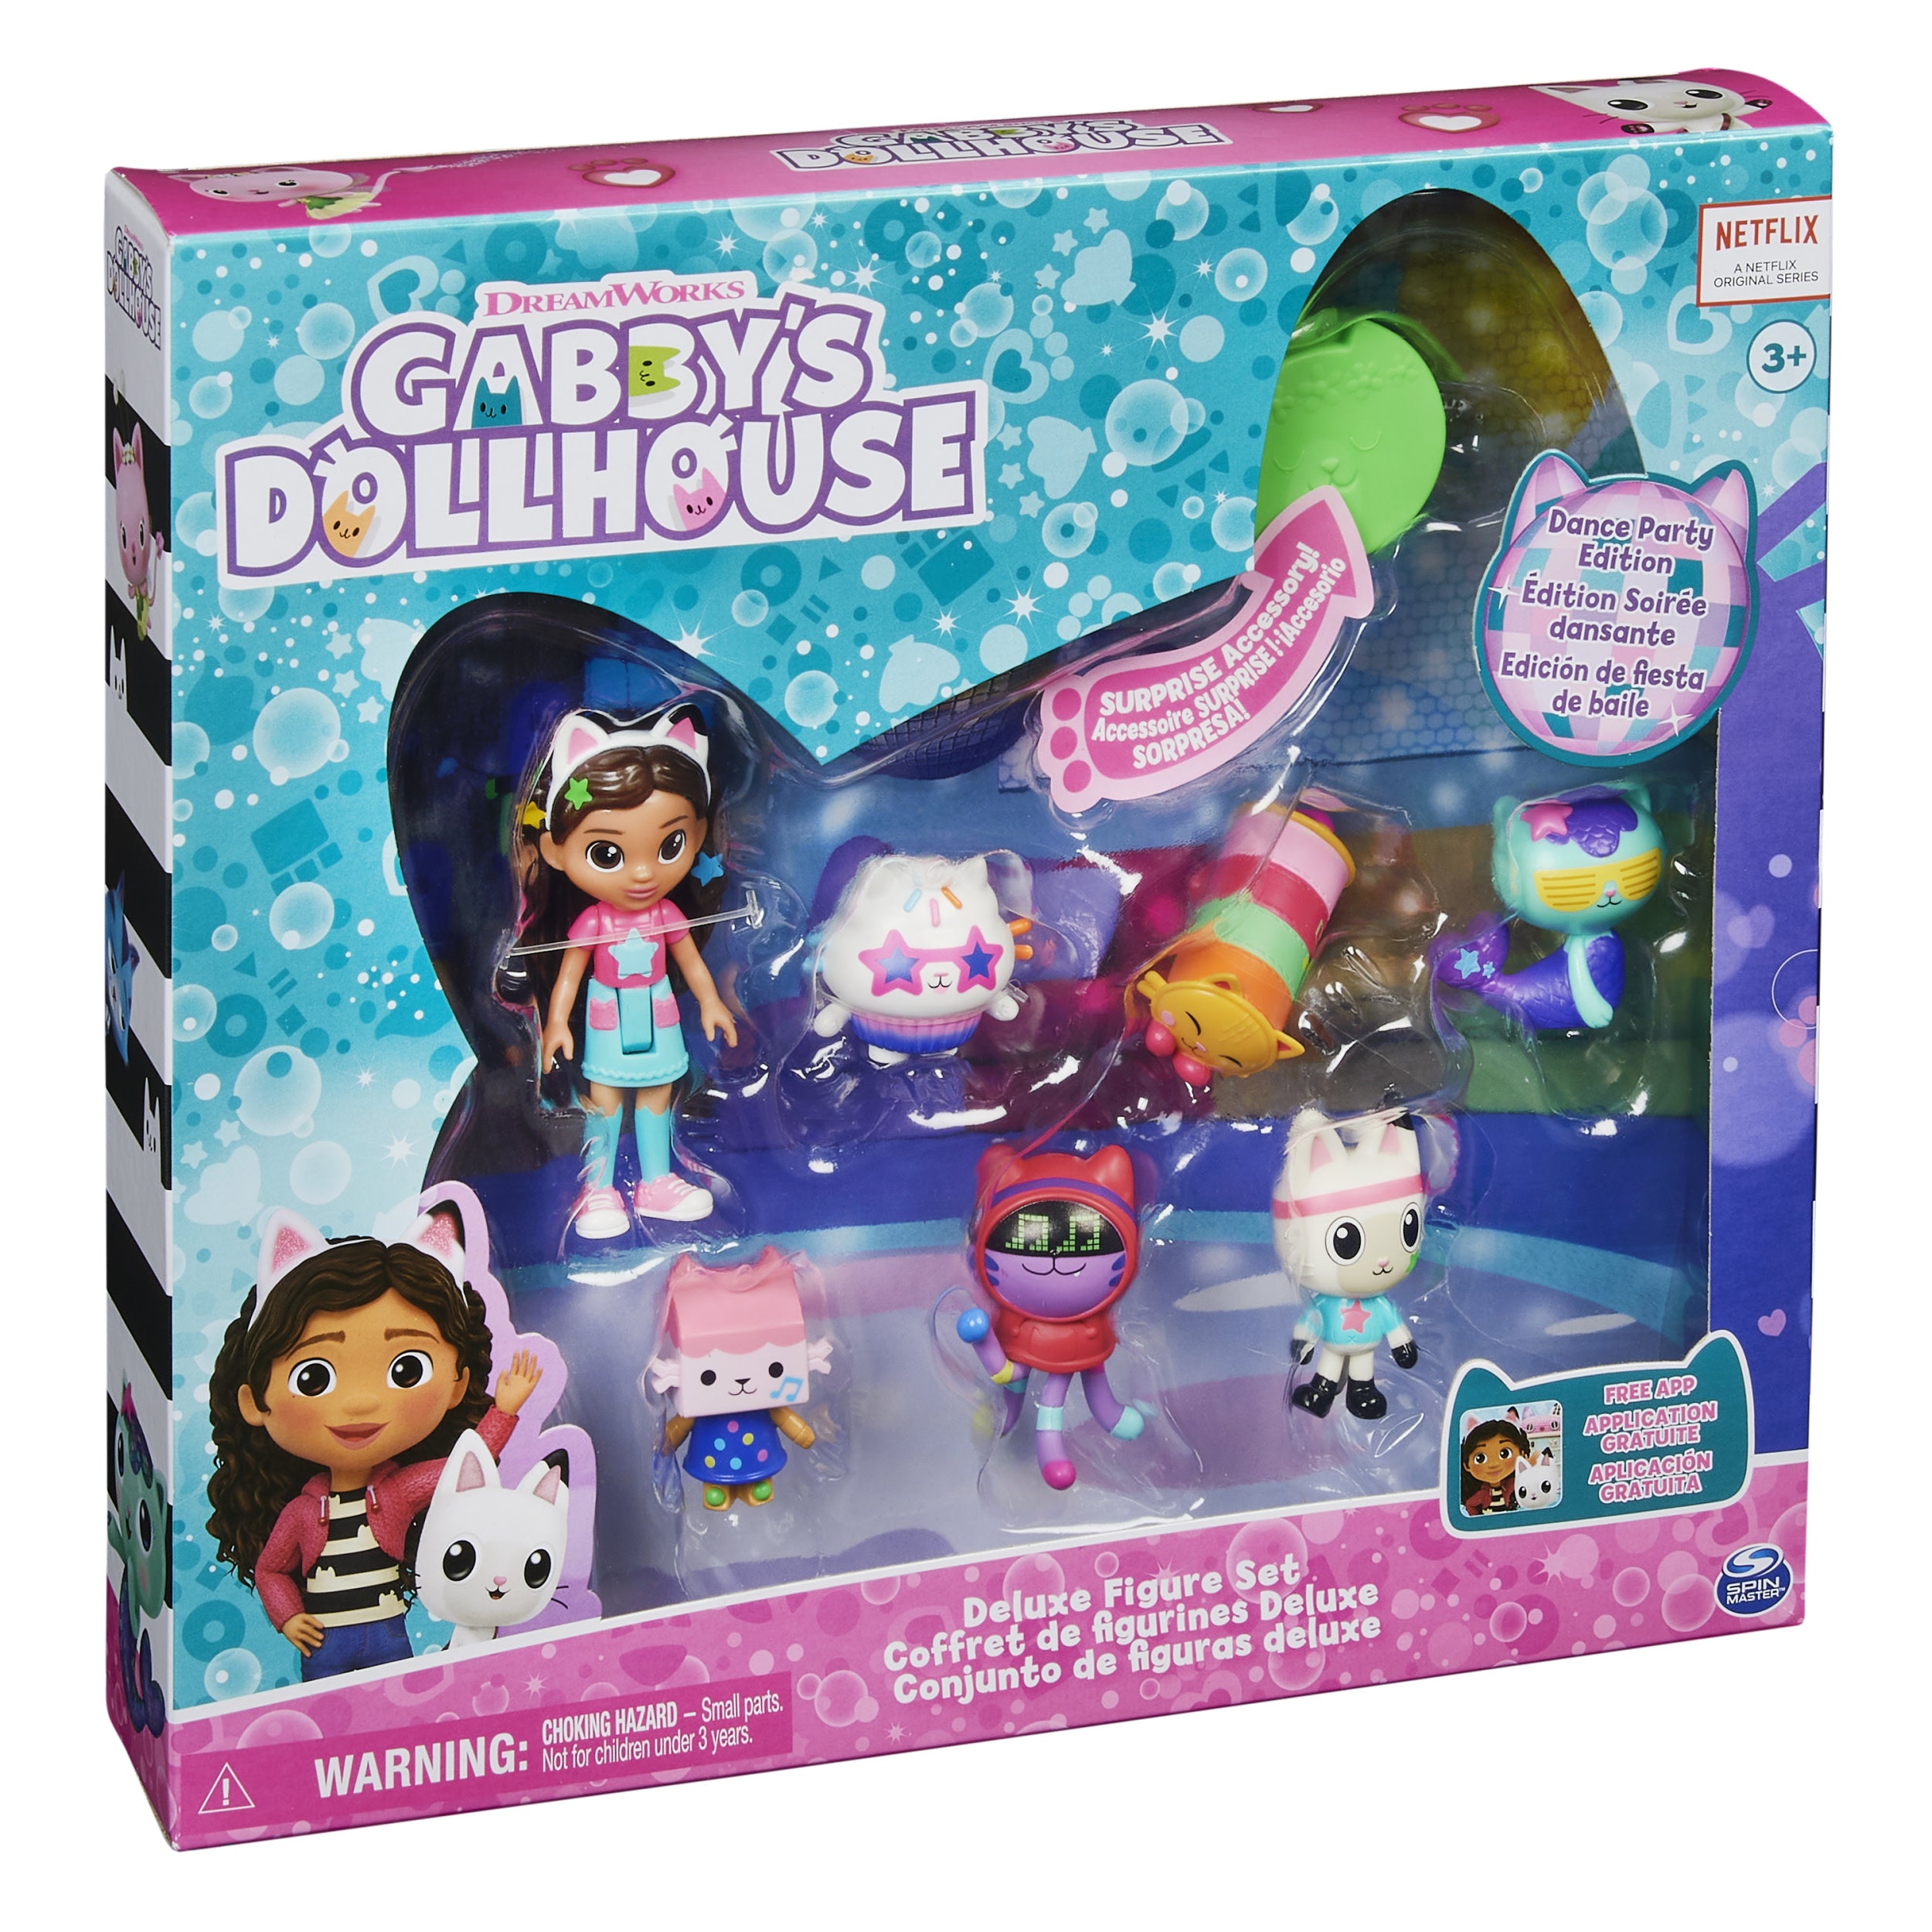  Luv Her Gabby's Dollhouse Girls BFF 6 Piece Toy